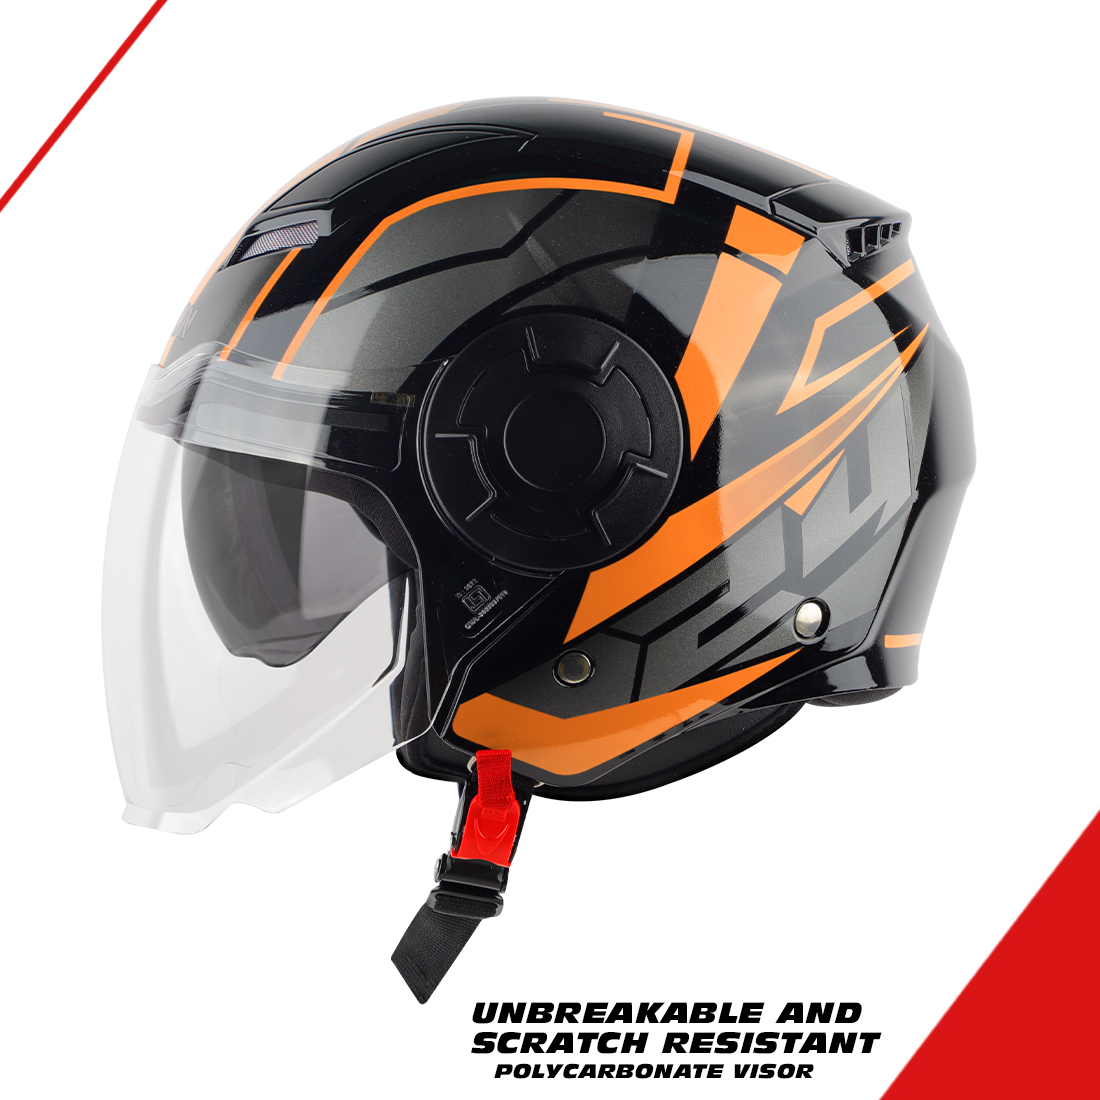 Steelbird SBH-31 Baron 24 ISI Certified Open Face Helmet For Men And Women With Inner Sun Shield(Dual Visor Mechanism) (Matt Black Orange)